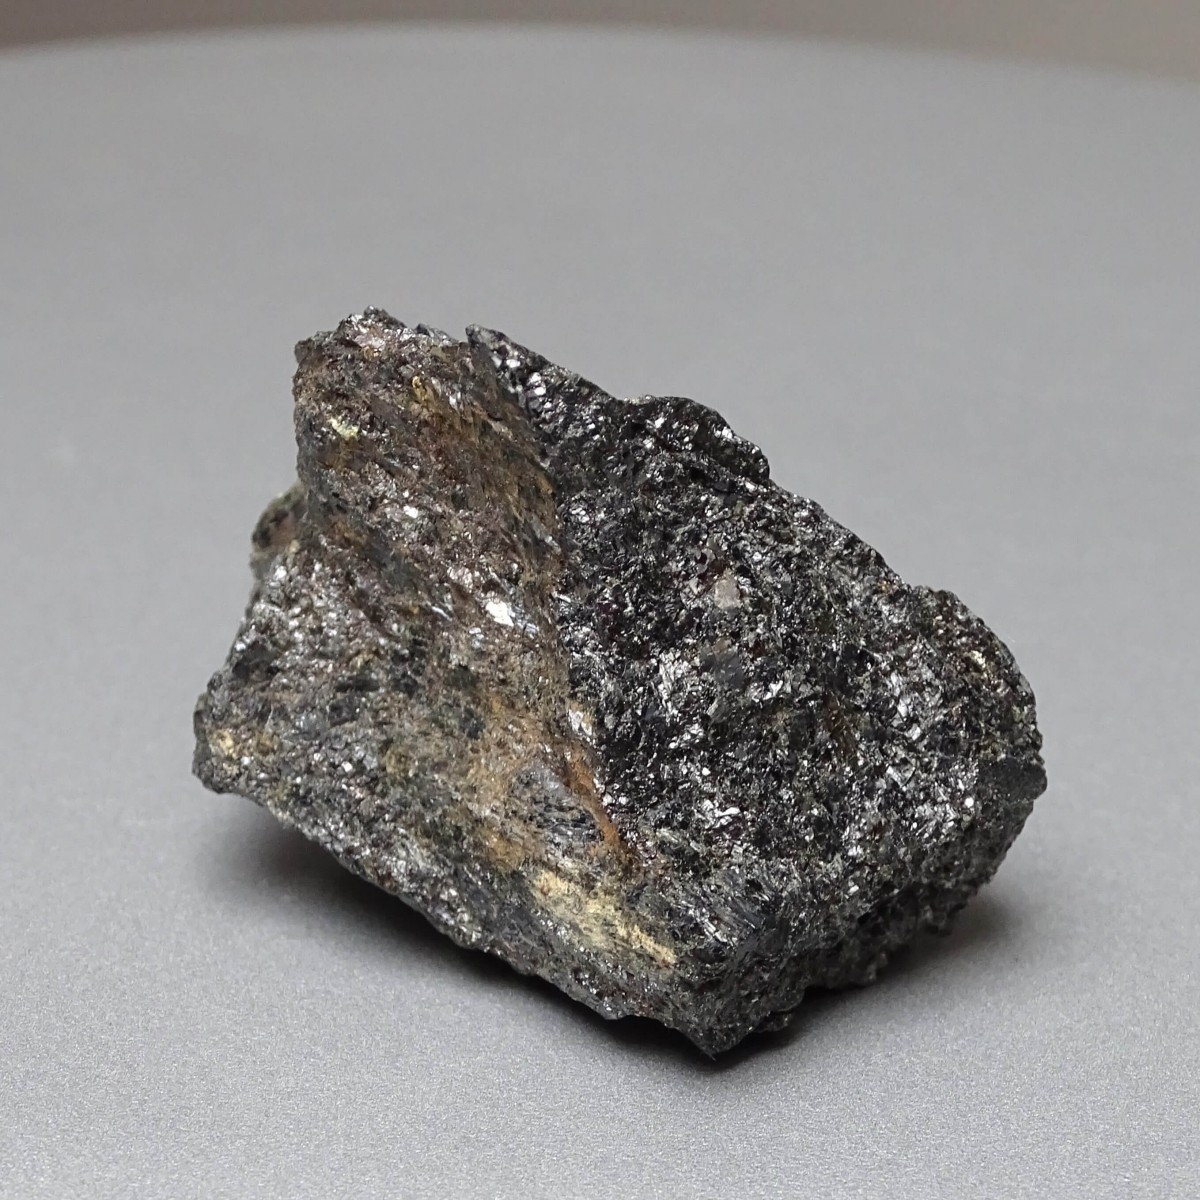 Nuummit surový minerál 58,2g, Grónsko